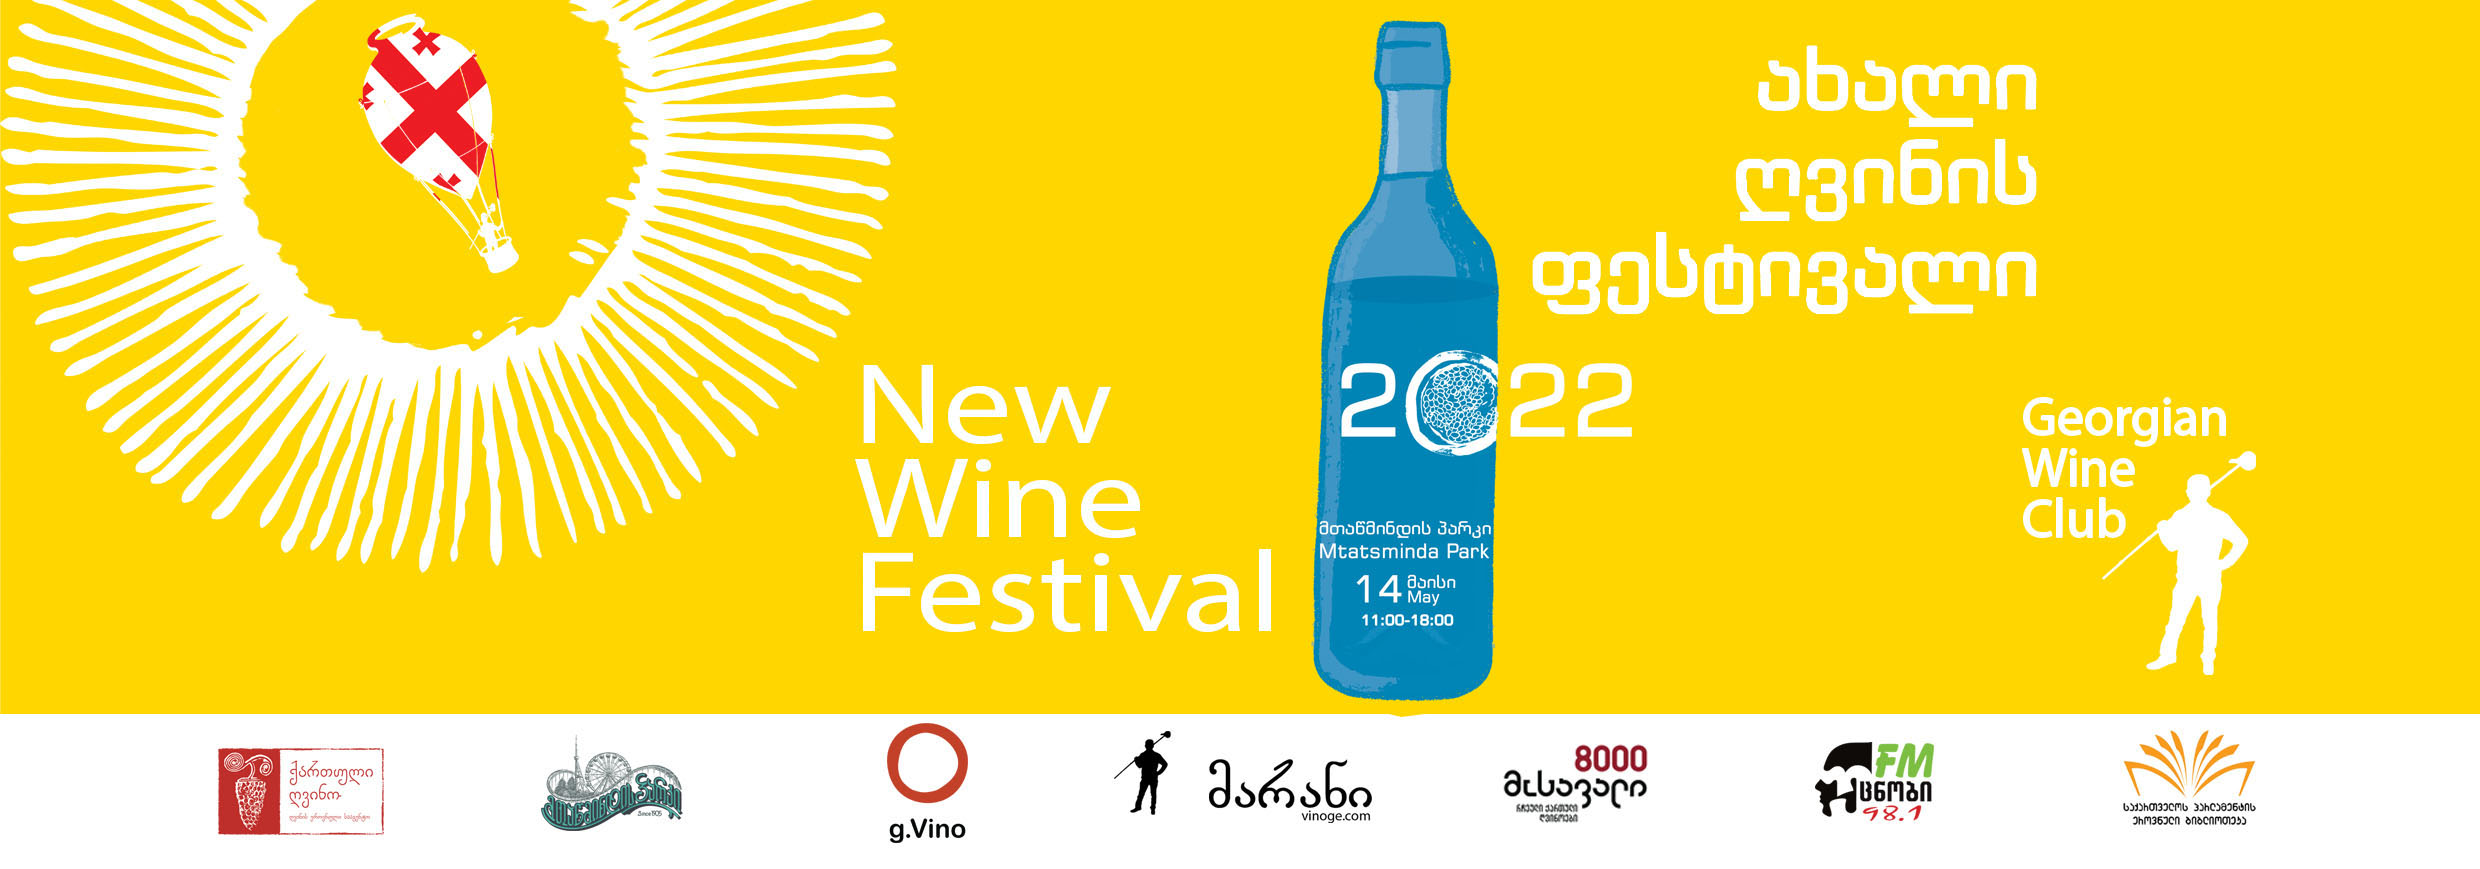 New Wine Festival 2022